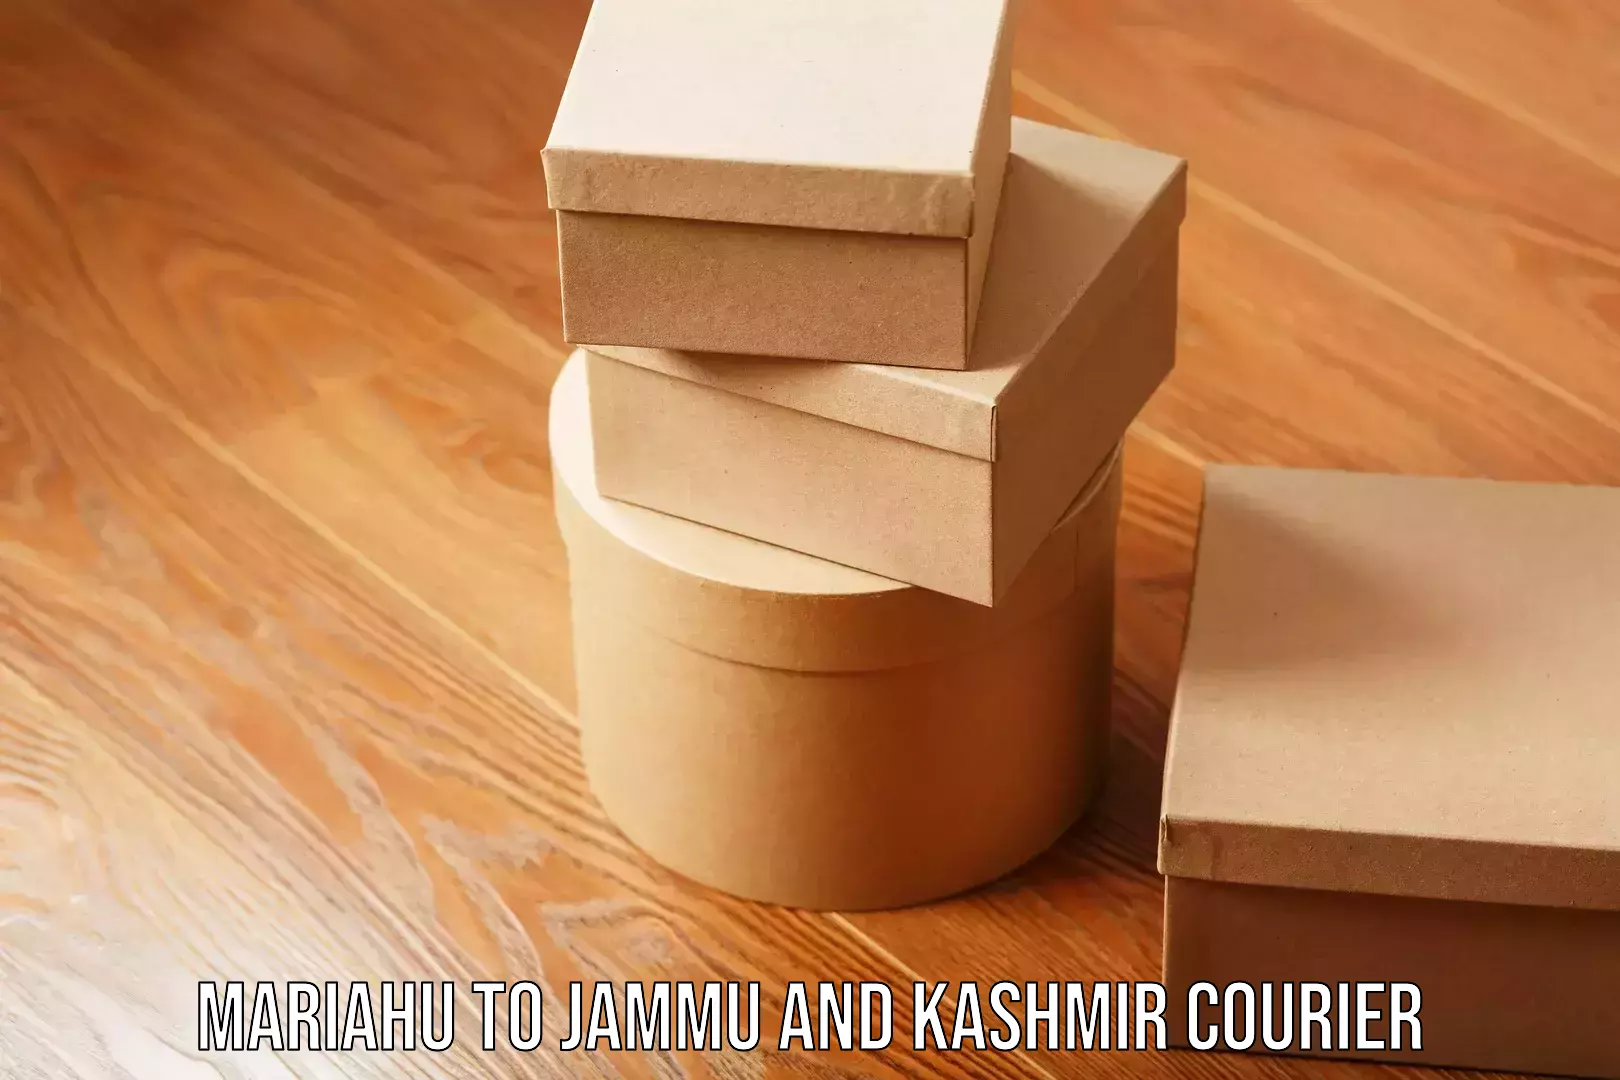 Quality moving and storage Mariahu to Jammu and Kashmir